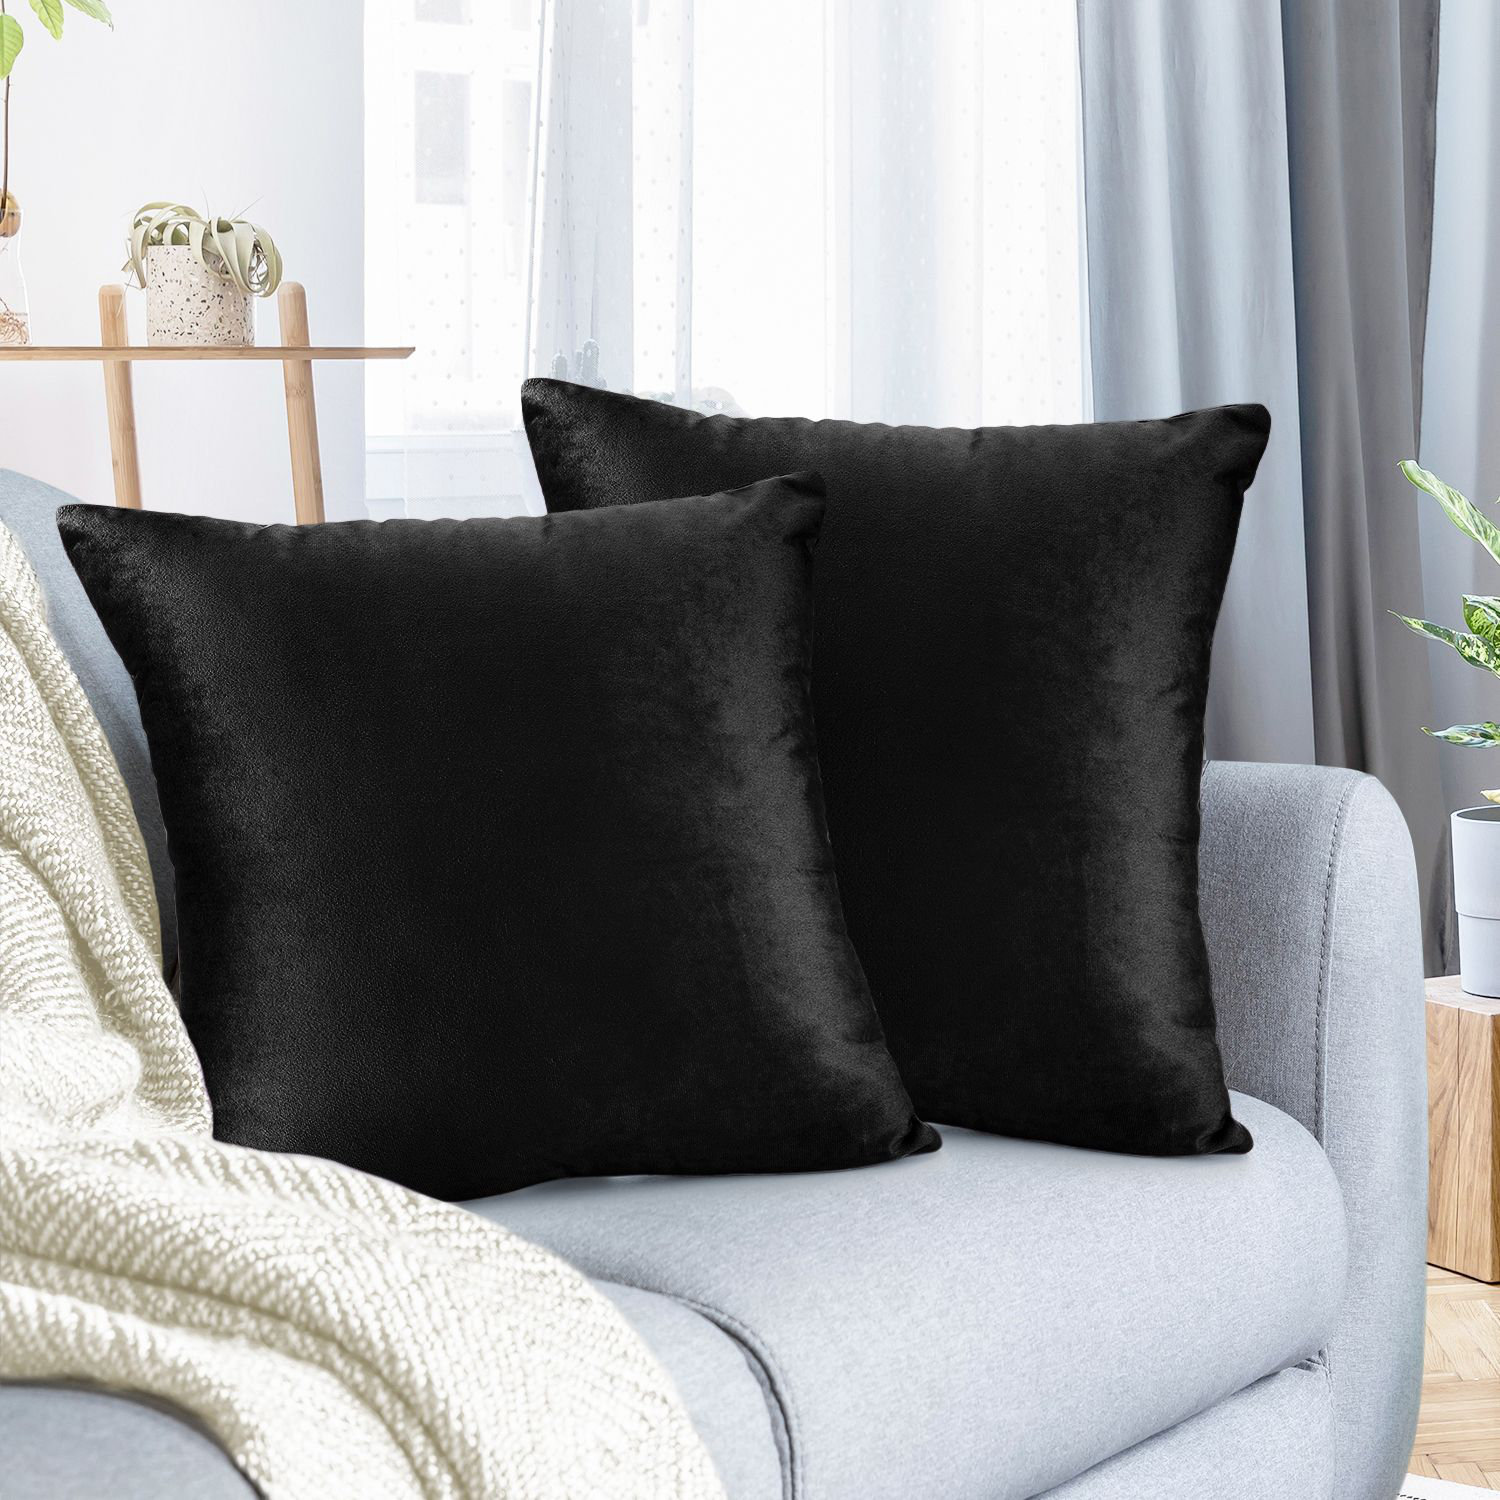 Black & White Bird Cushion Covers Linen Throw Pillow Case Home Decor T 